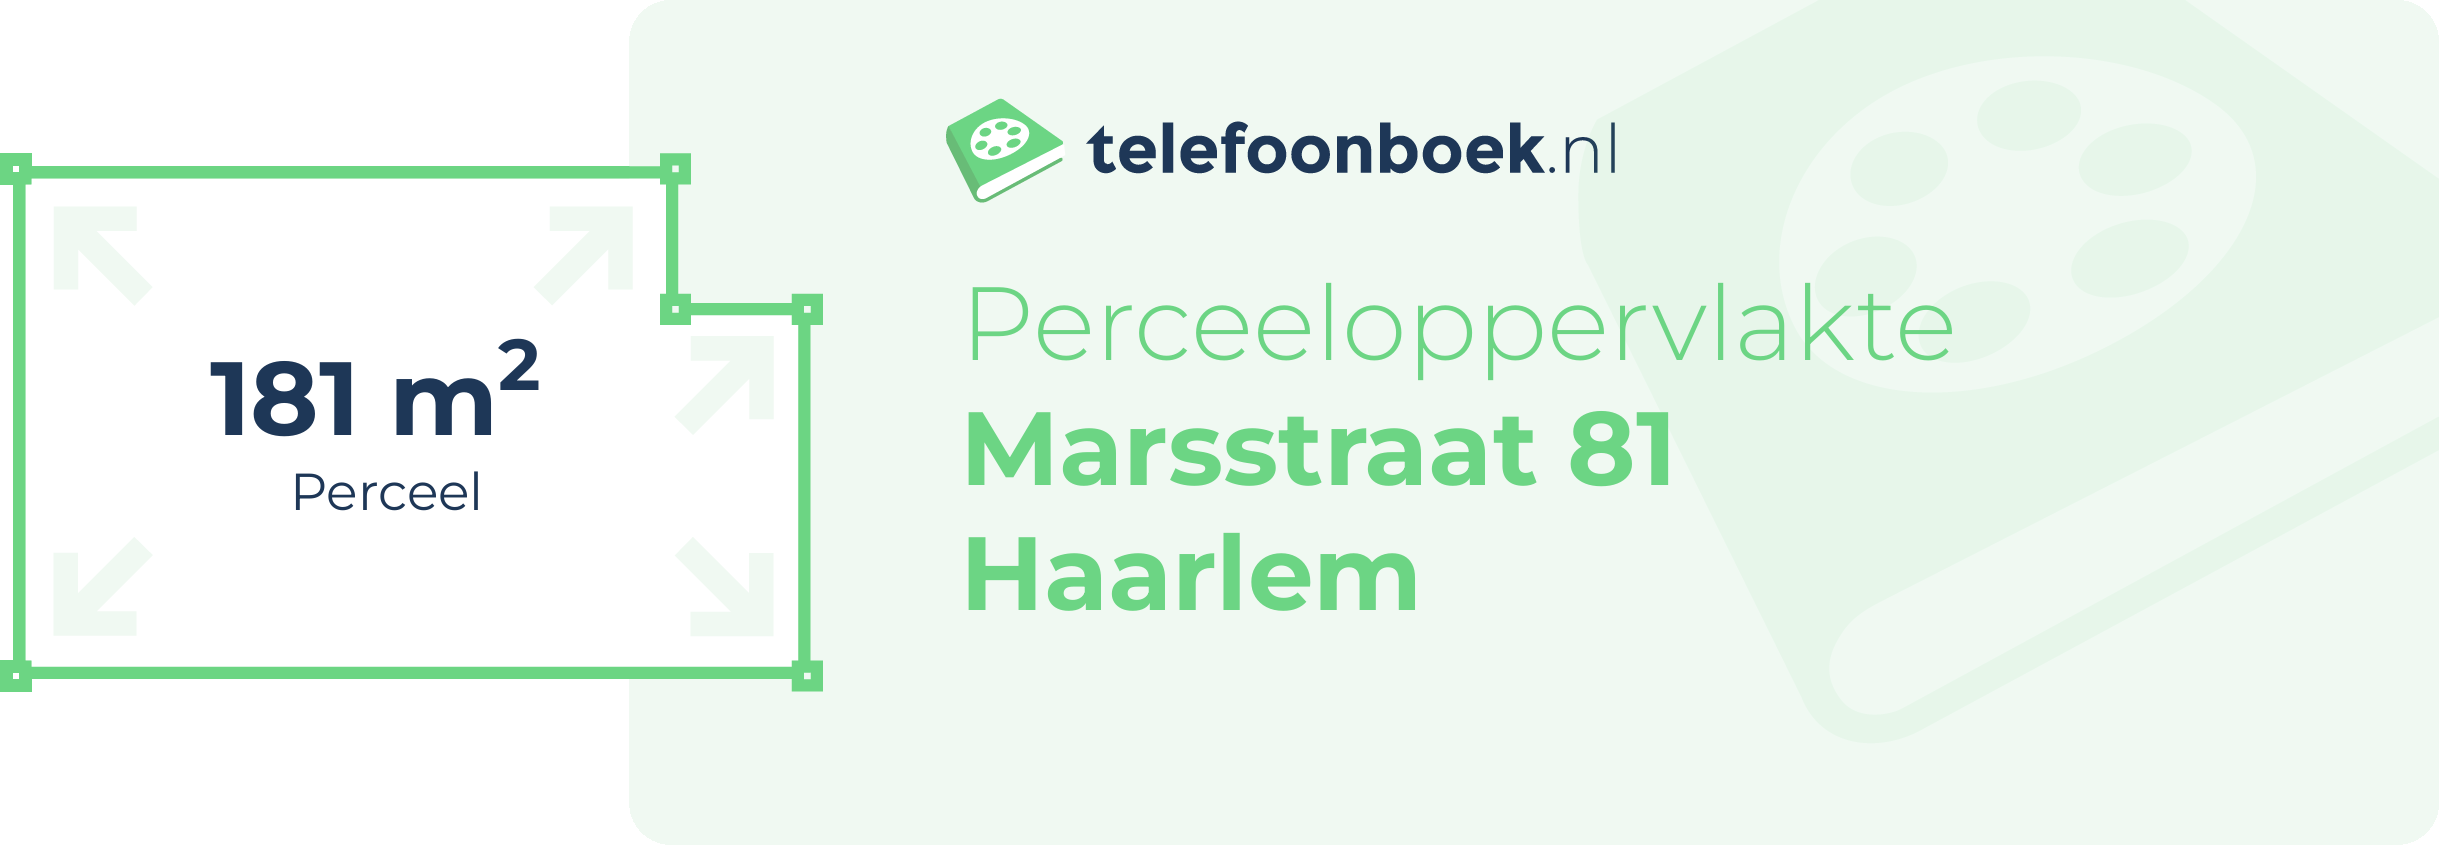 Perceeloppervlakte Marsstraat 81 Haarlem